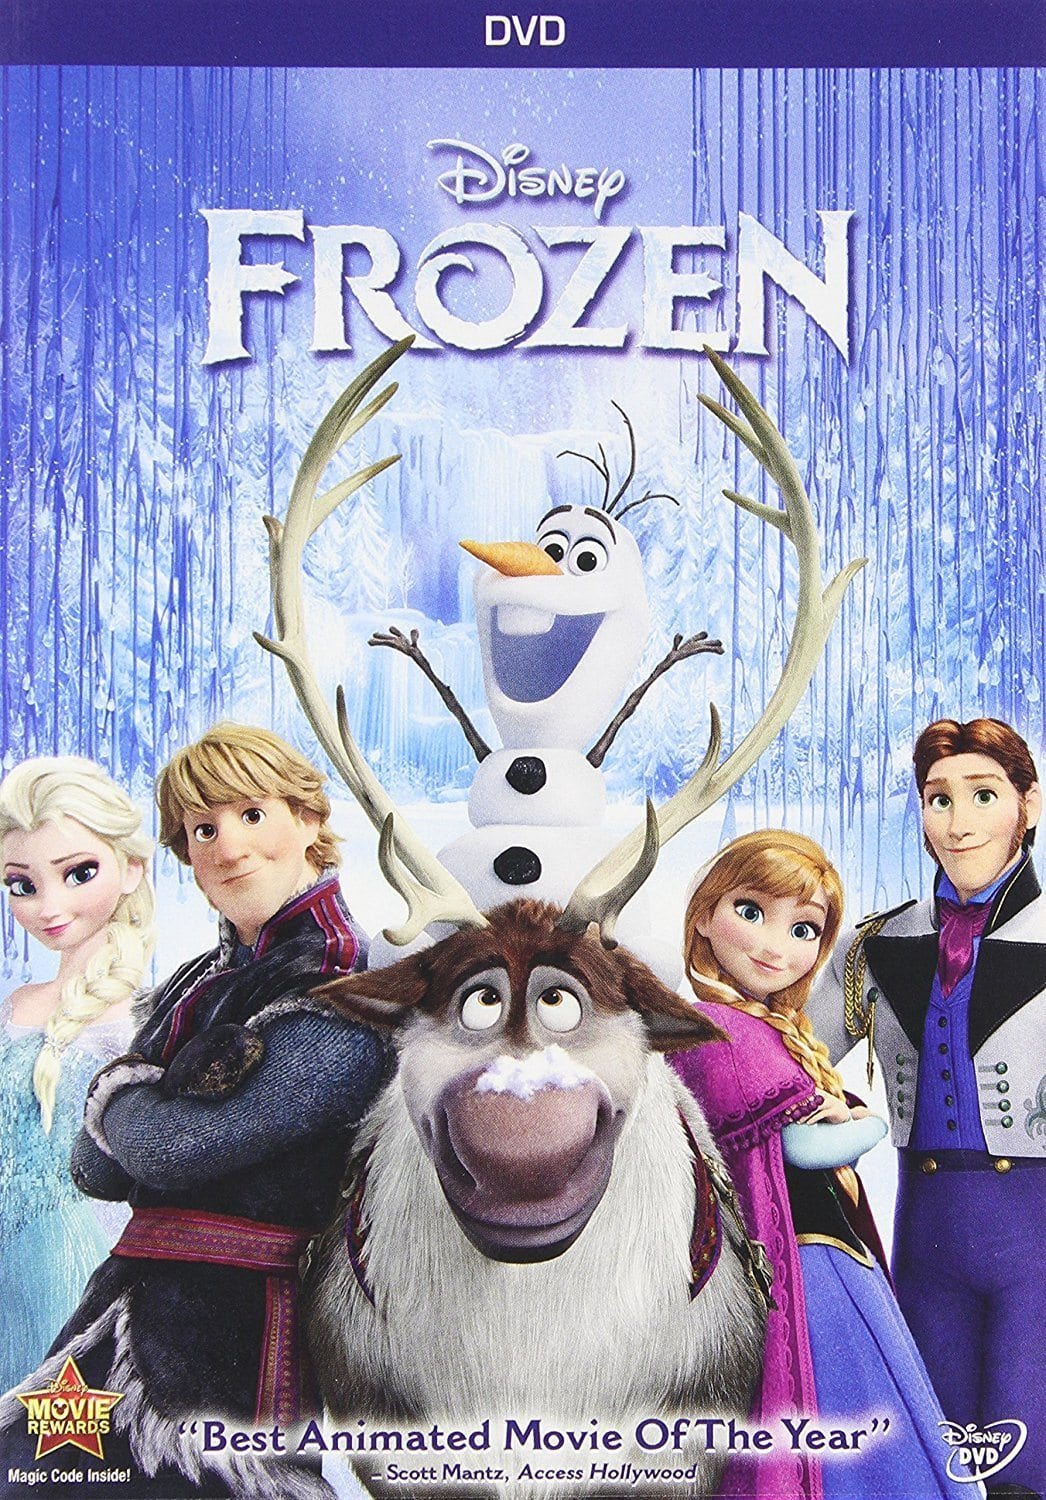 Best travel movies for kids - Frozen